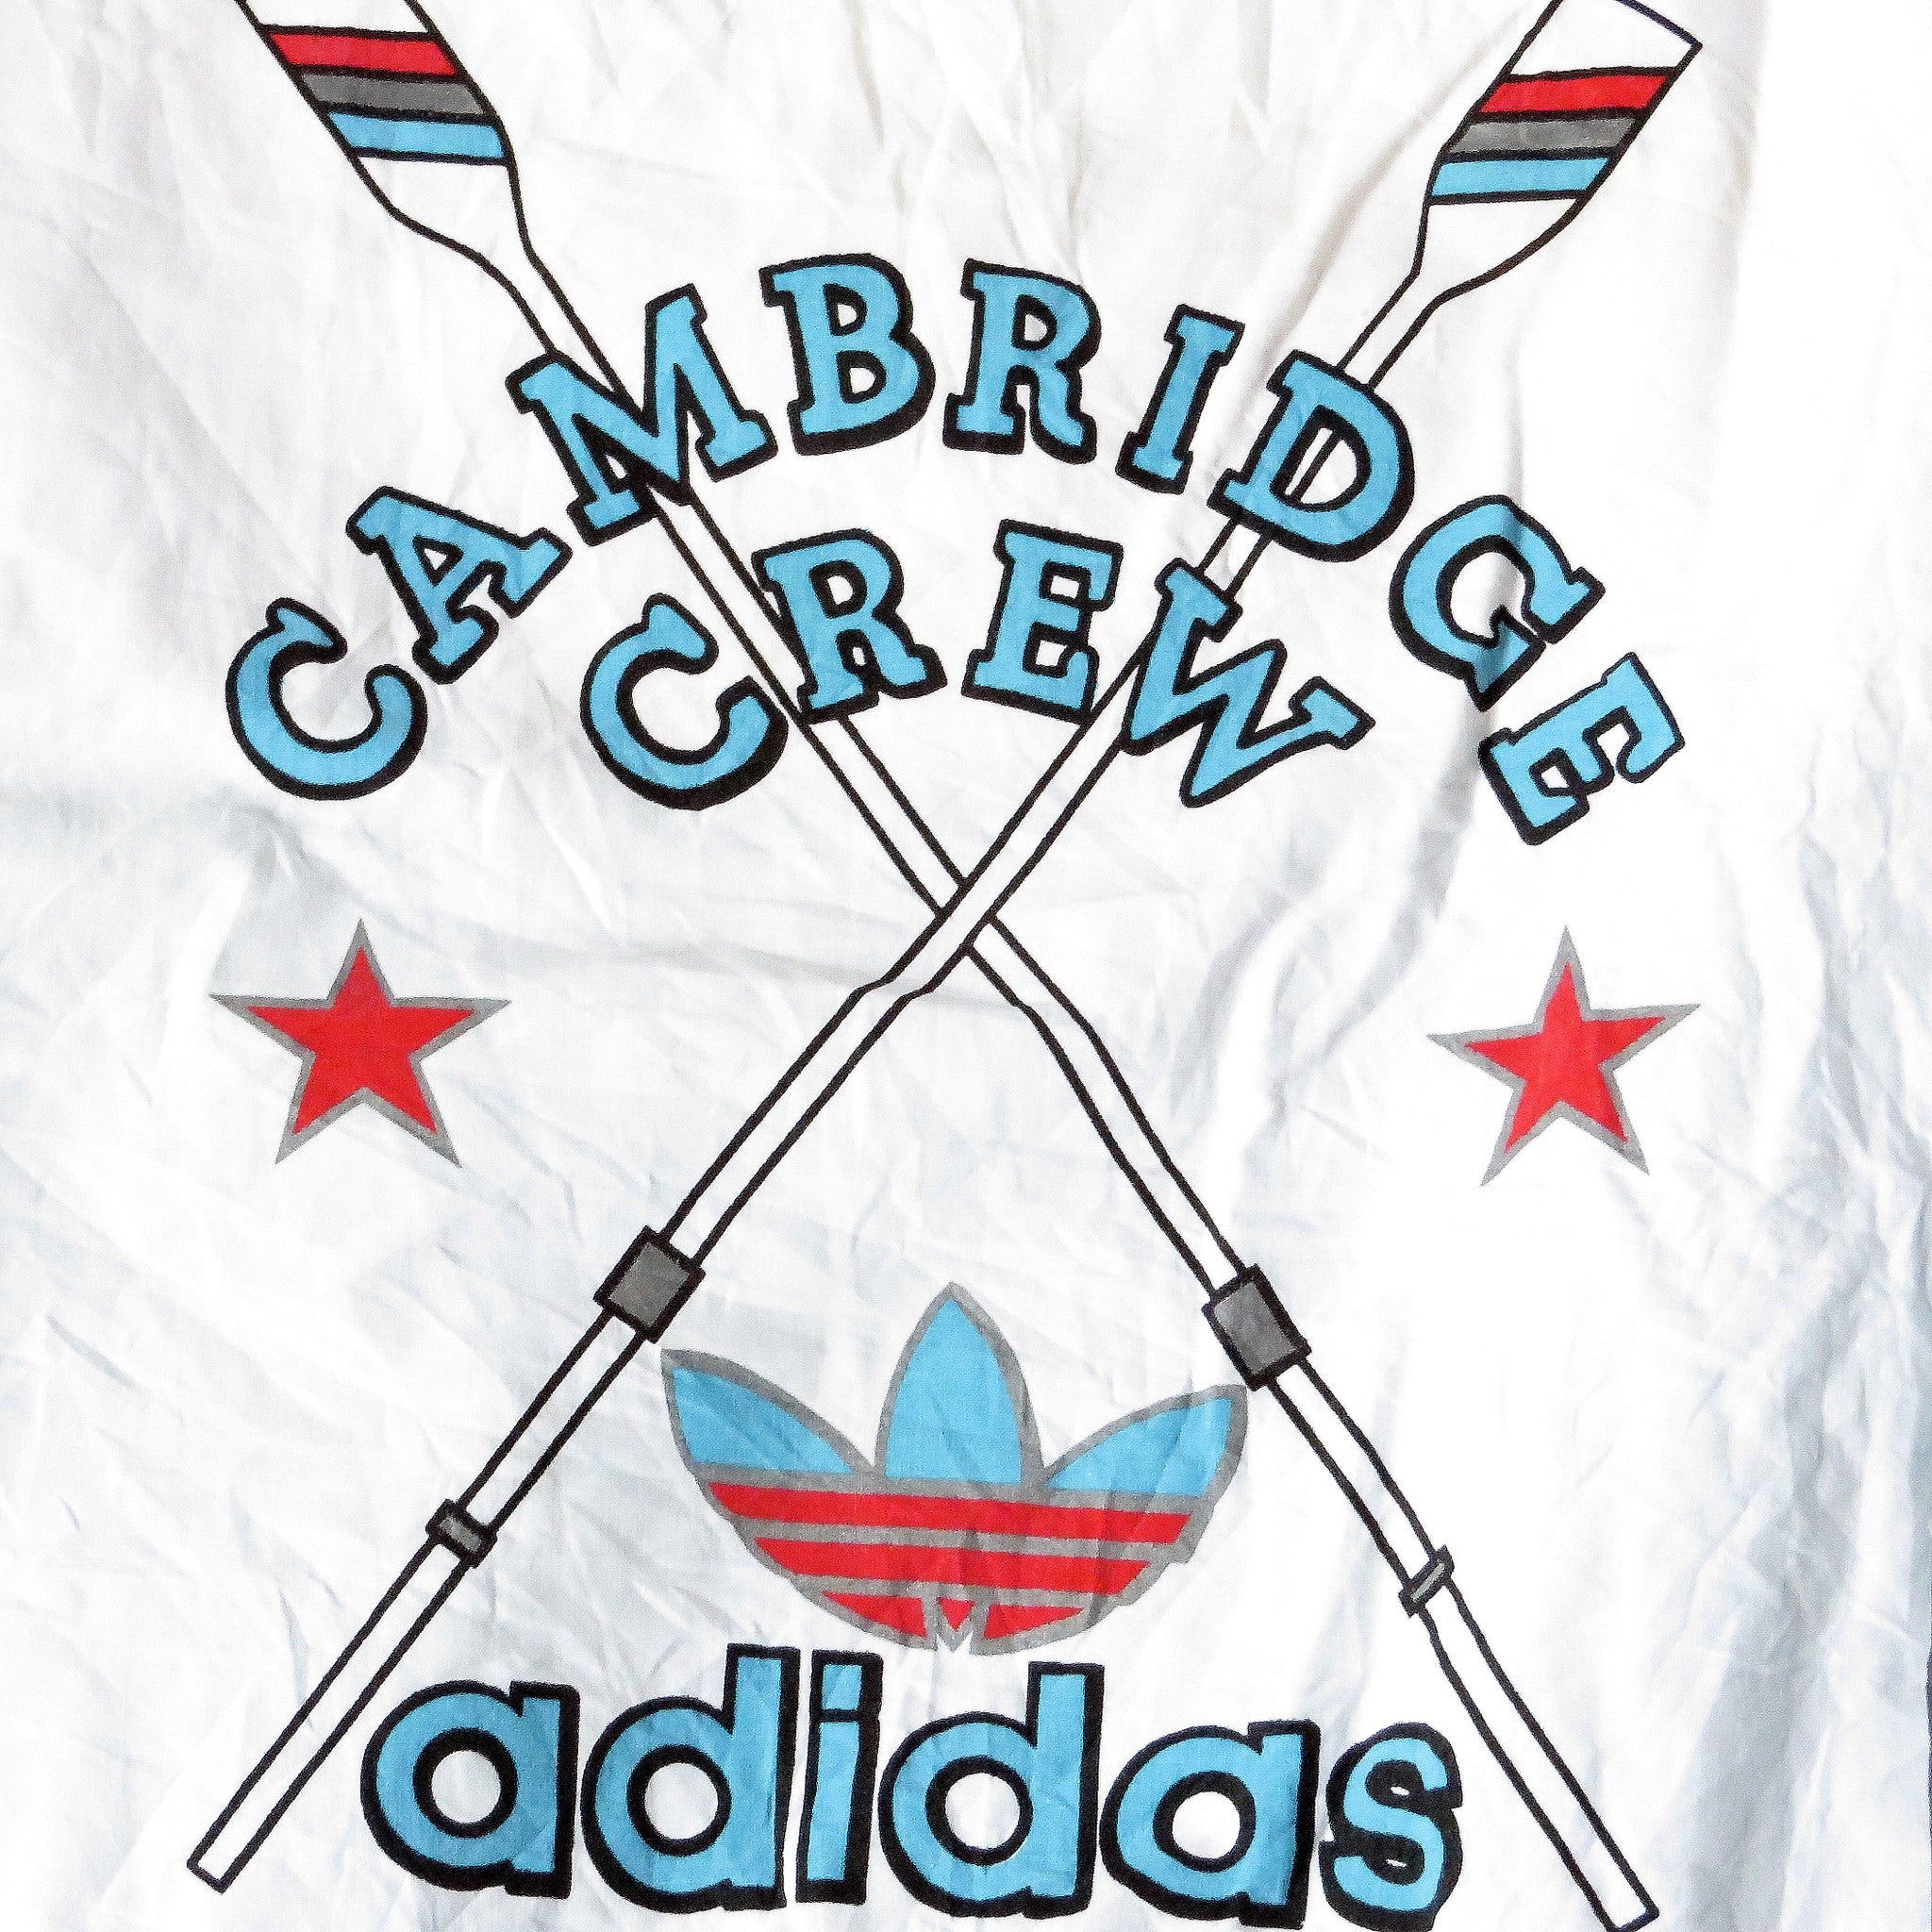 Vintage Adidas Cambridge Crew Crewneck Sweatshirt Sz M